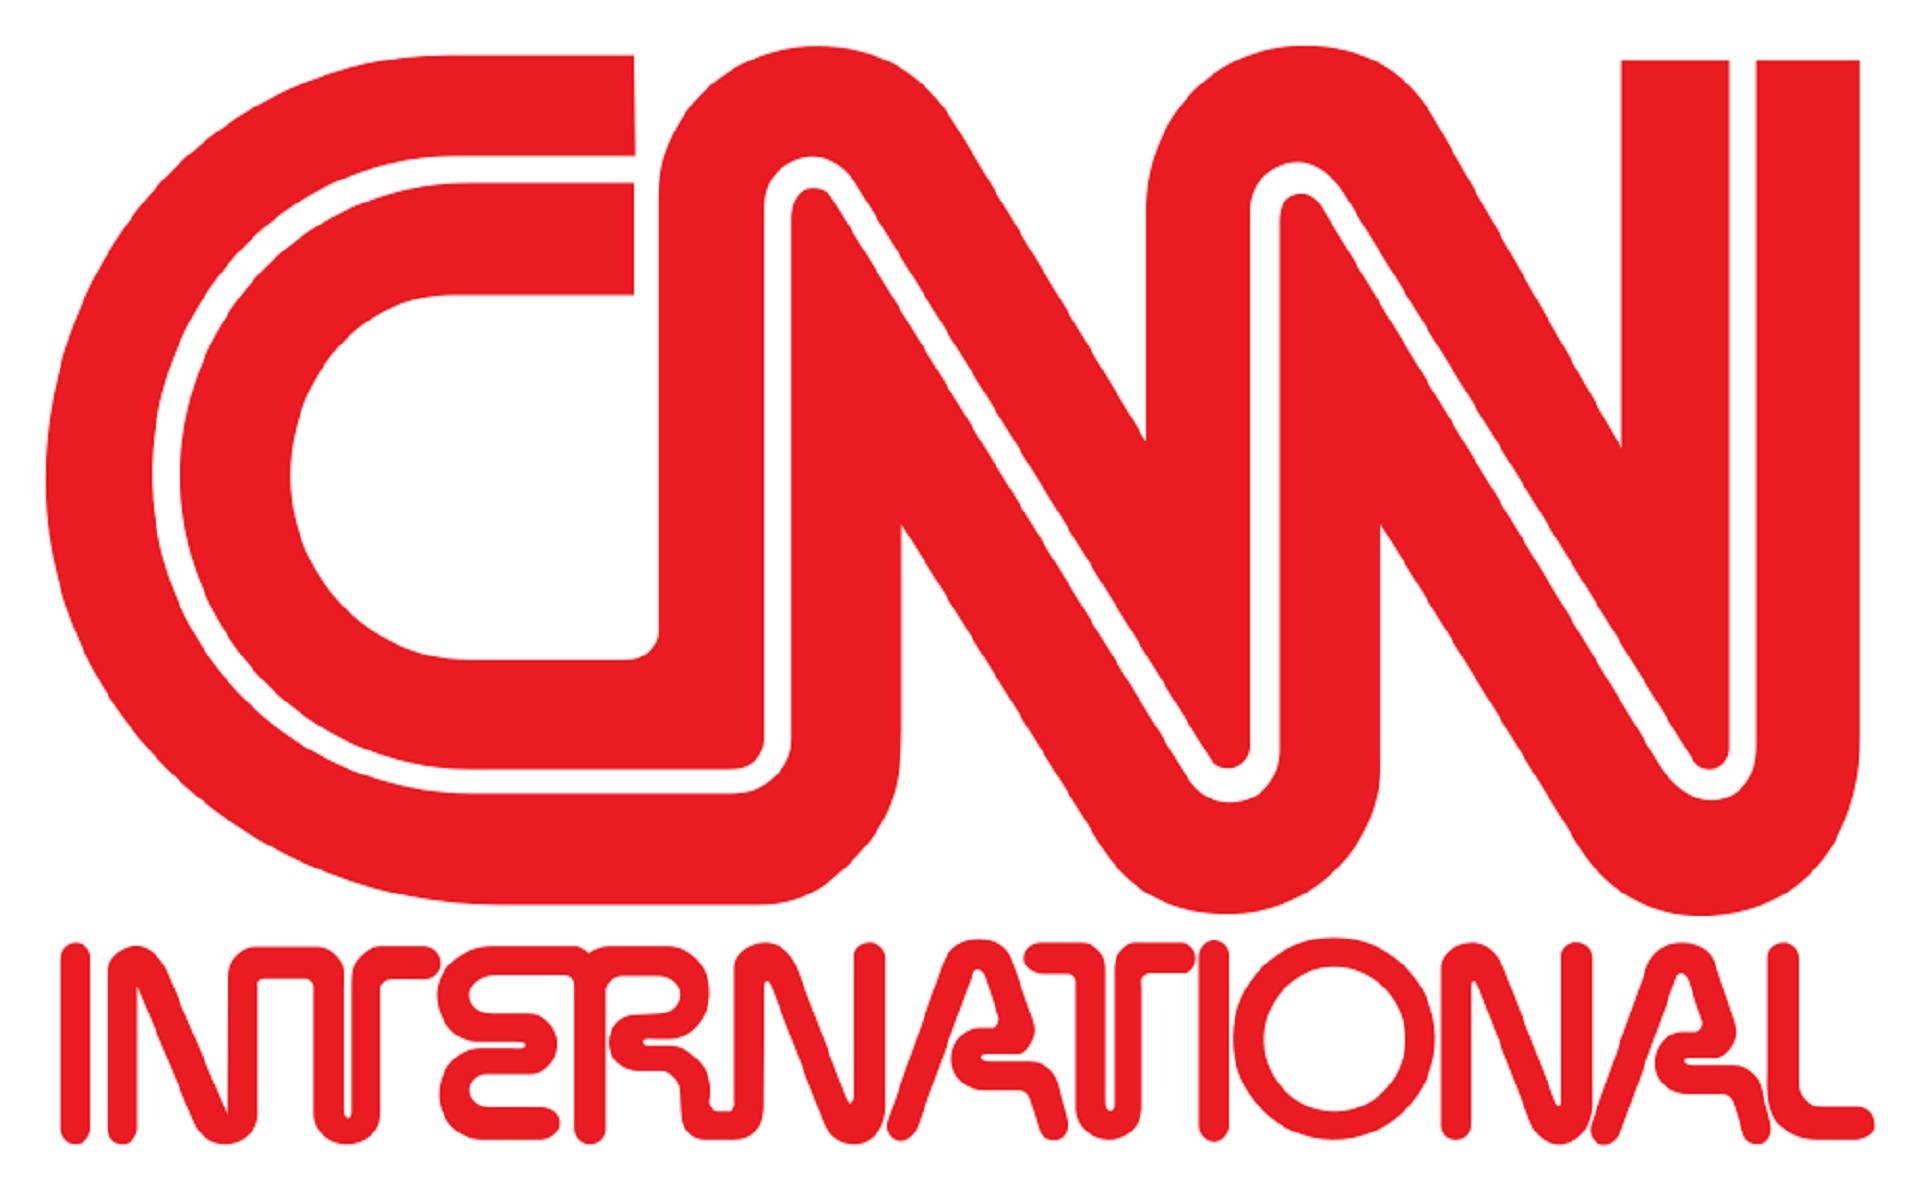 Cnn International Logo